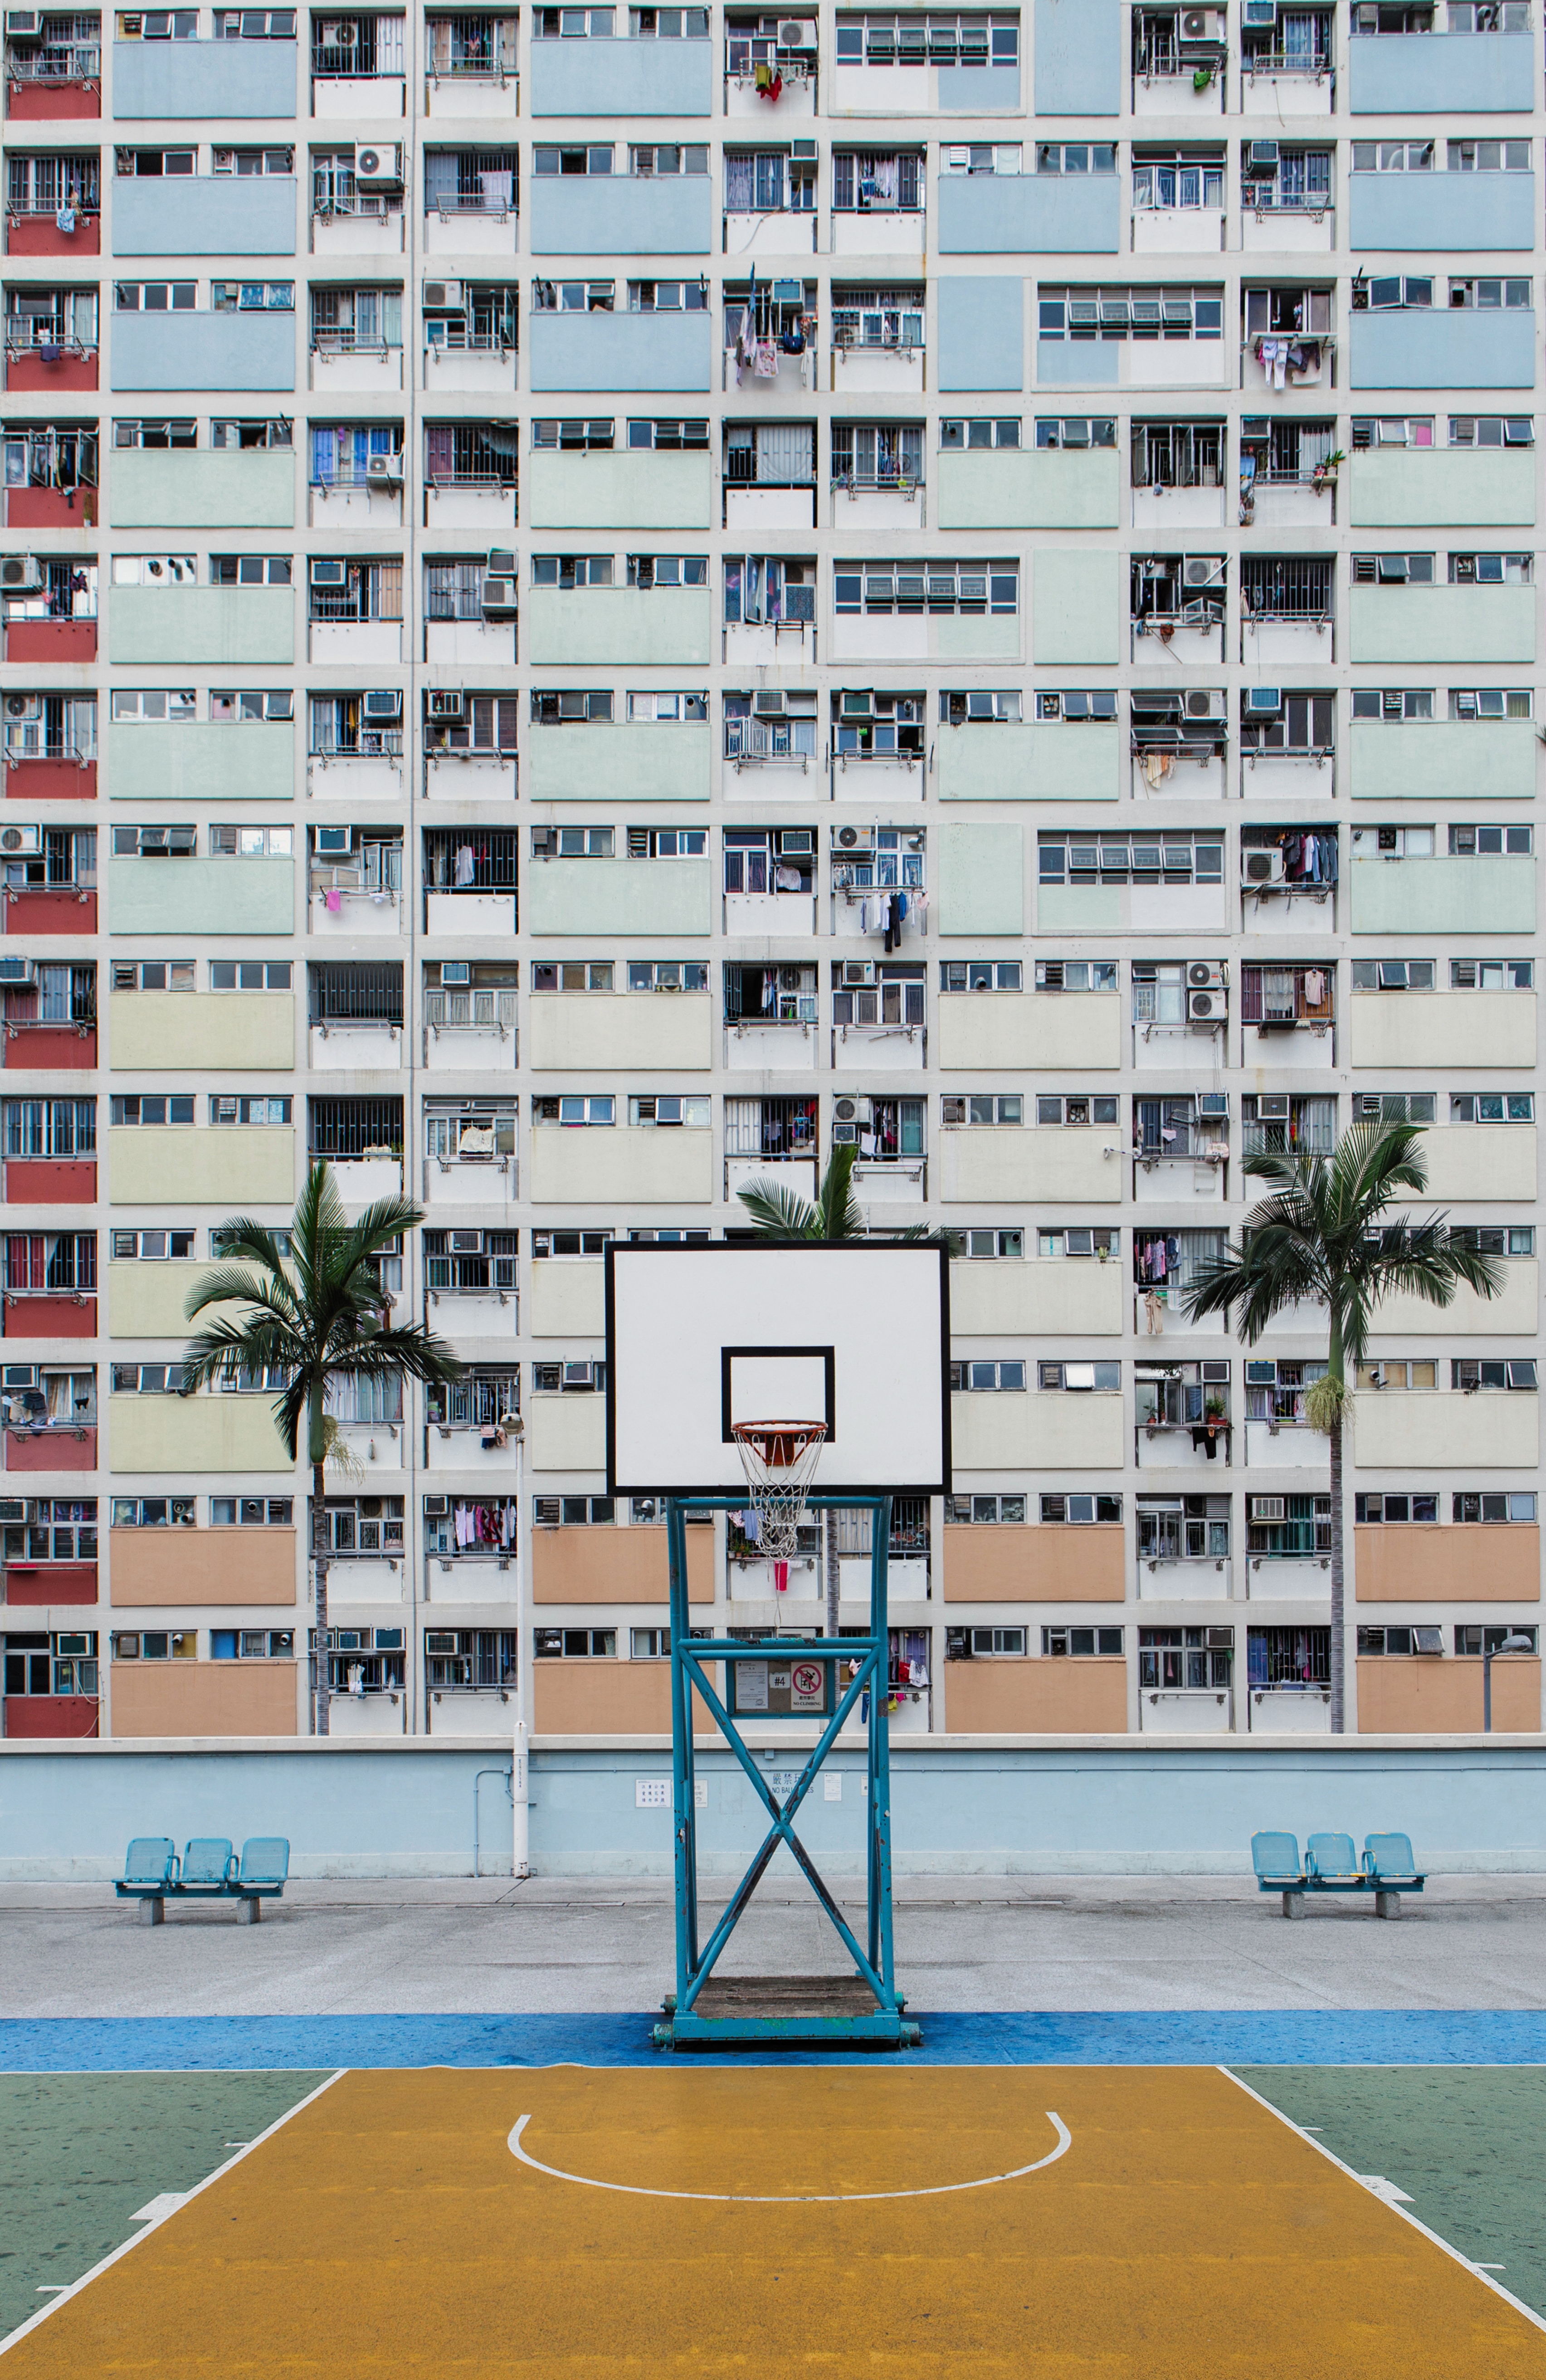 basketball court, sports, building, playground, platform, roof, urban, basketball playground